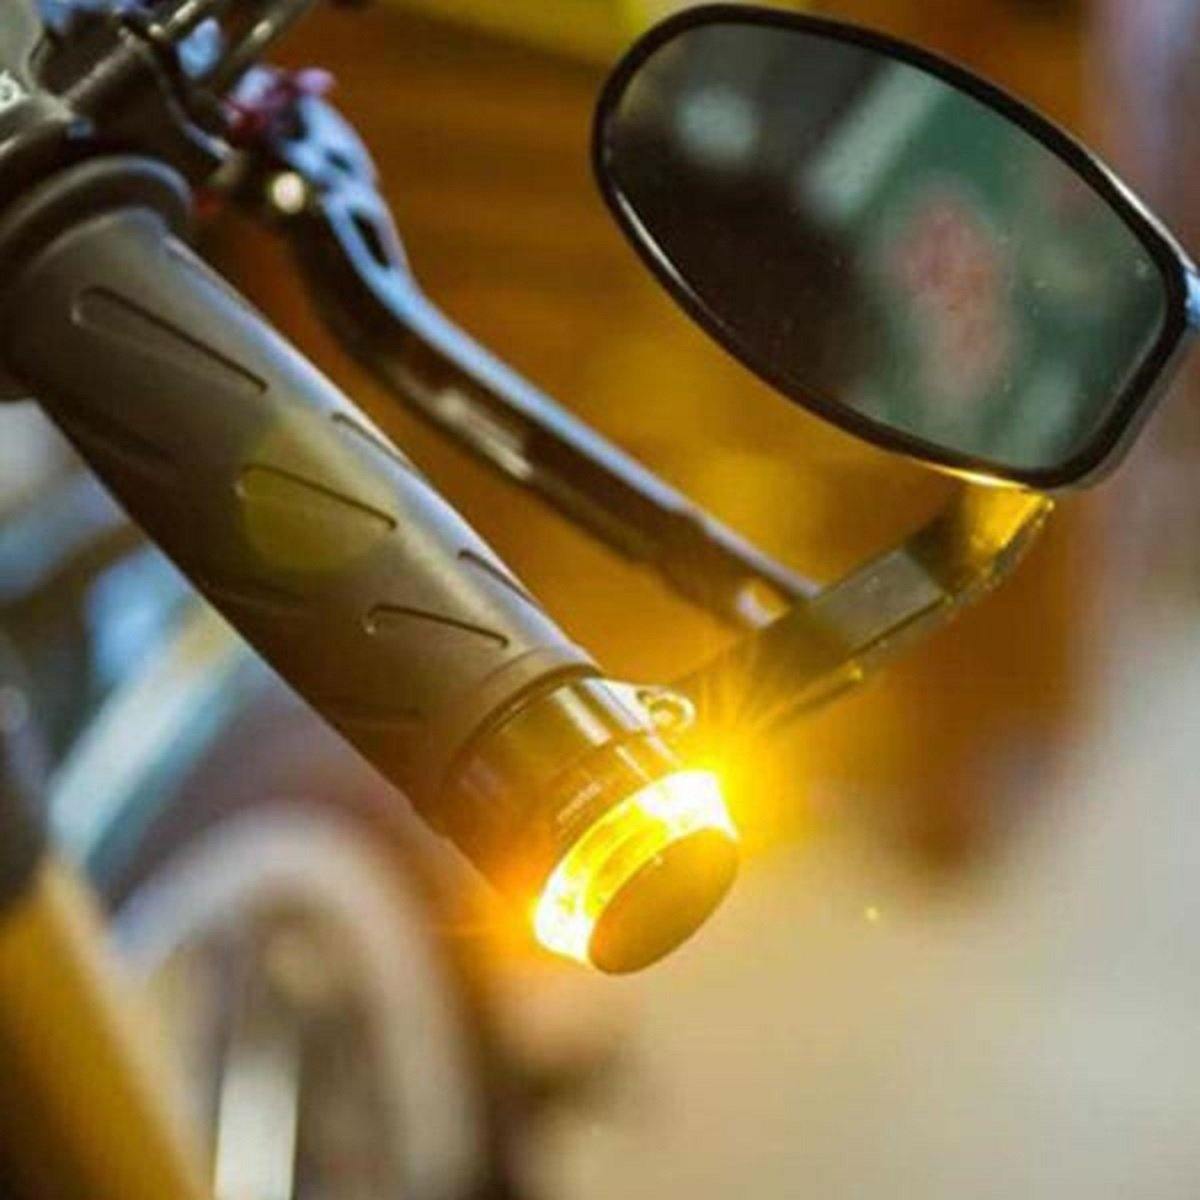 Universal Motorcycle Turn Signal LED Light End Handlebar - 2pcs, ABS, 12V, Black Body - American Legend Rider